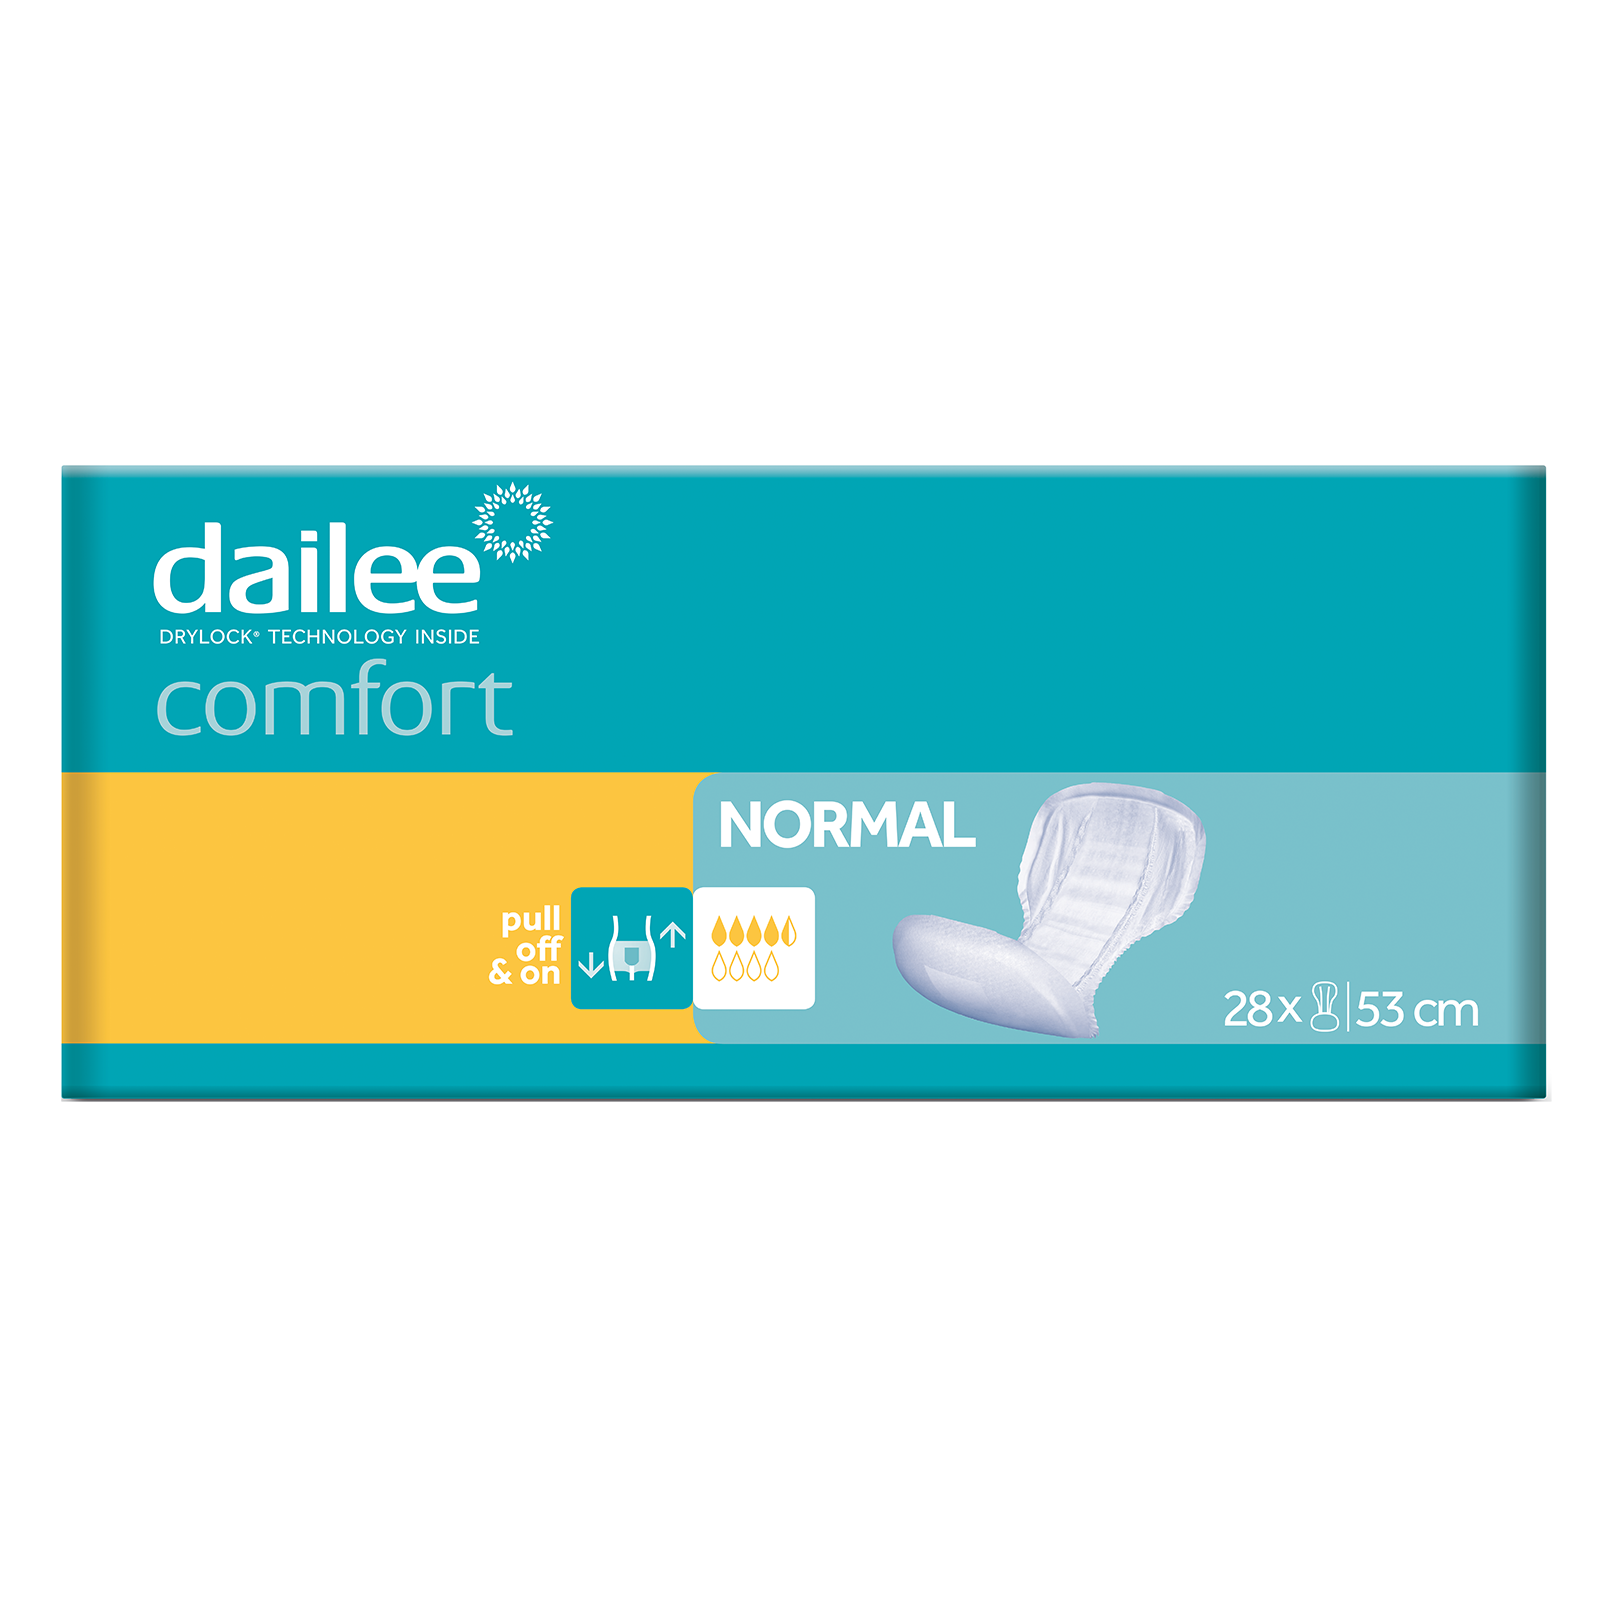 dailee_comfort_normal_thumb